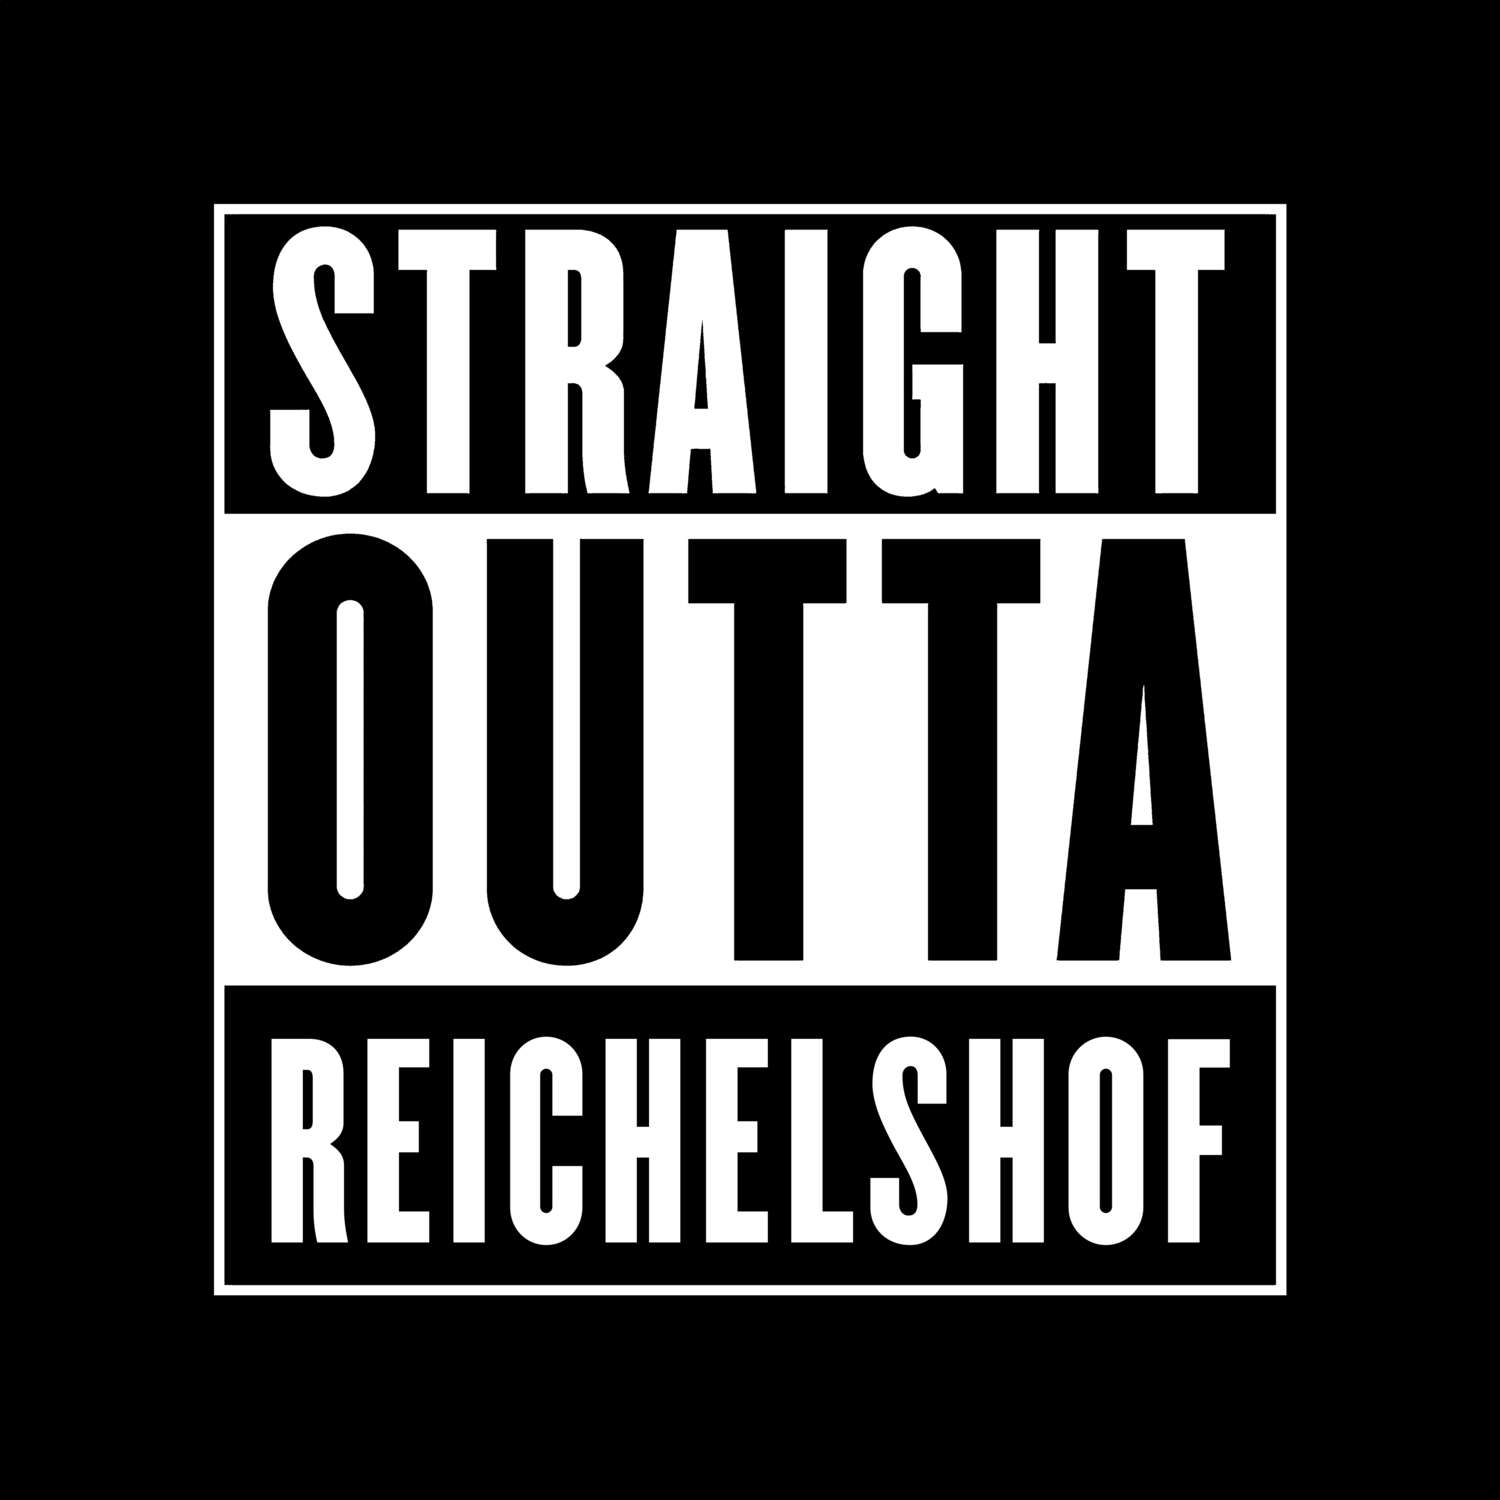 Reichelshof T-Shirt »Straight Outta«